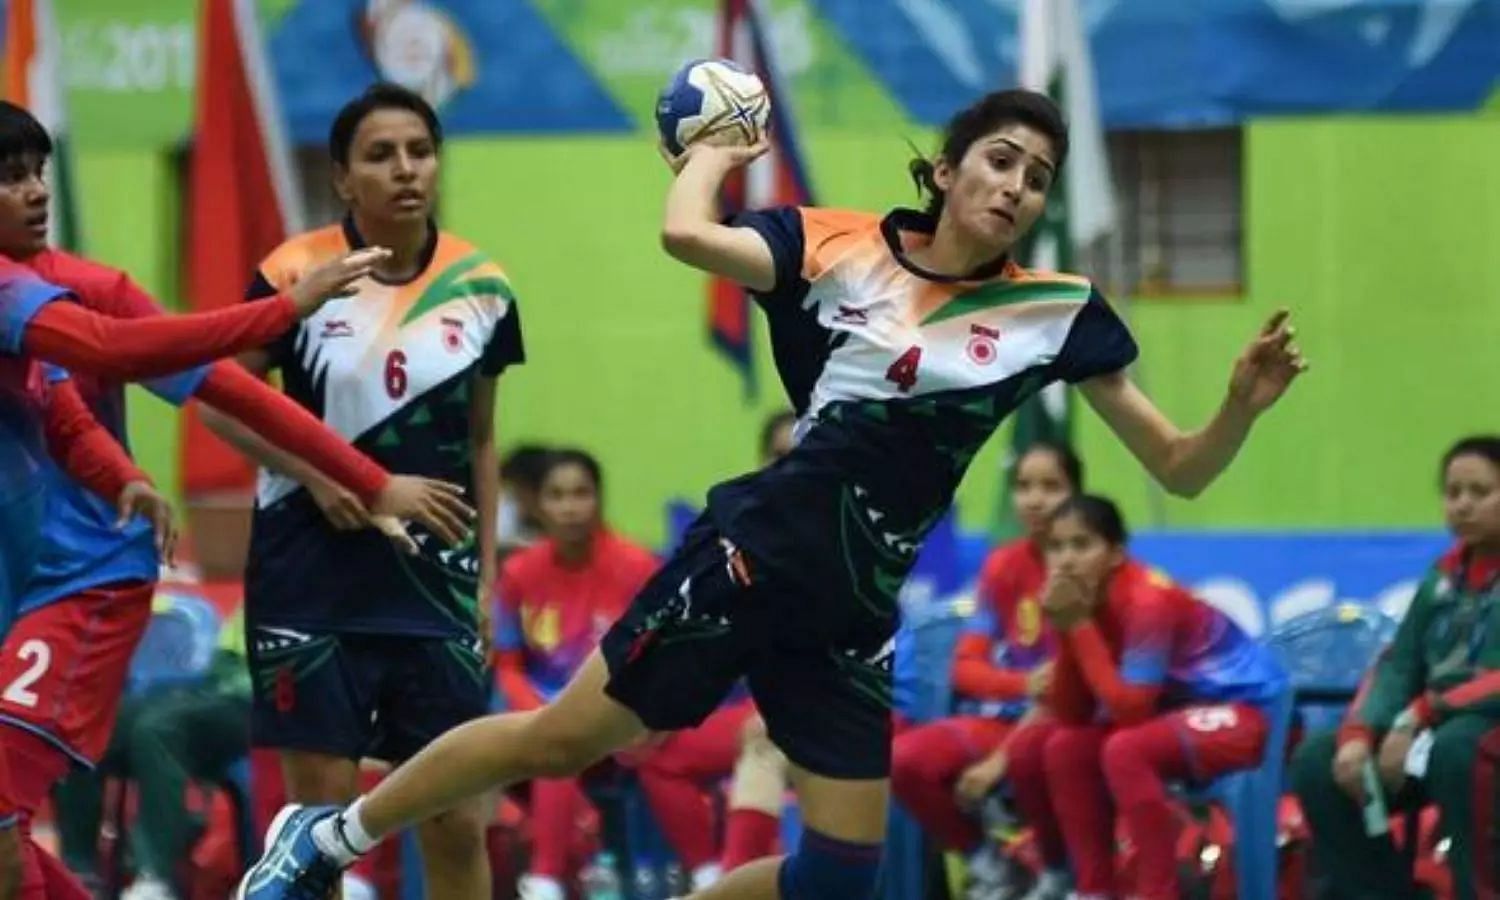 Image Courtesy: Handball Federation of India